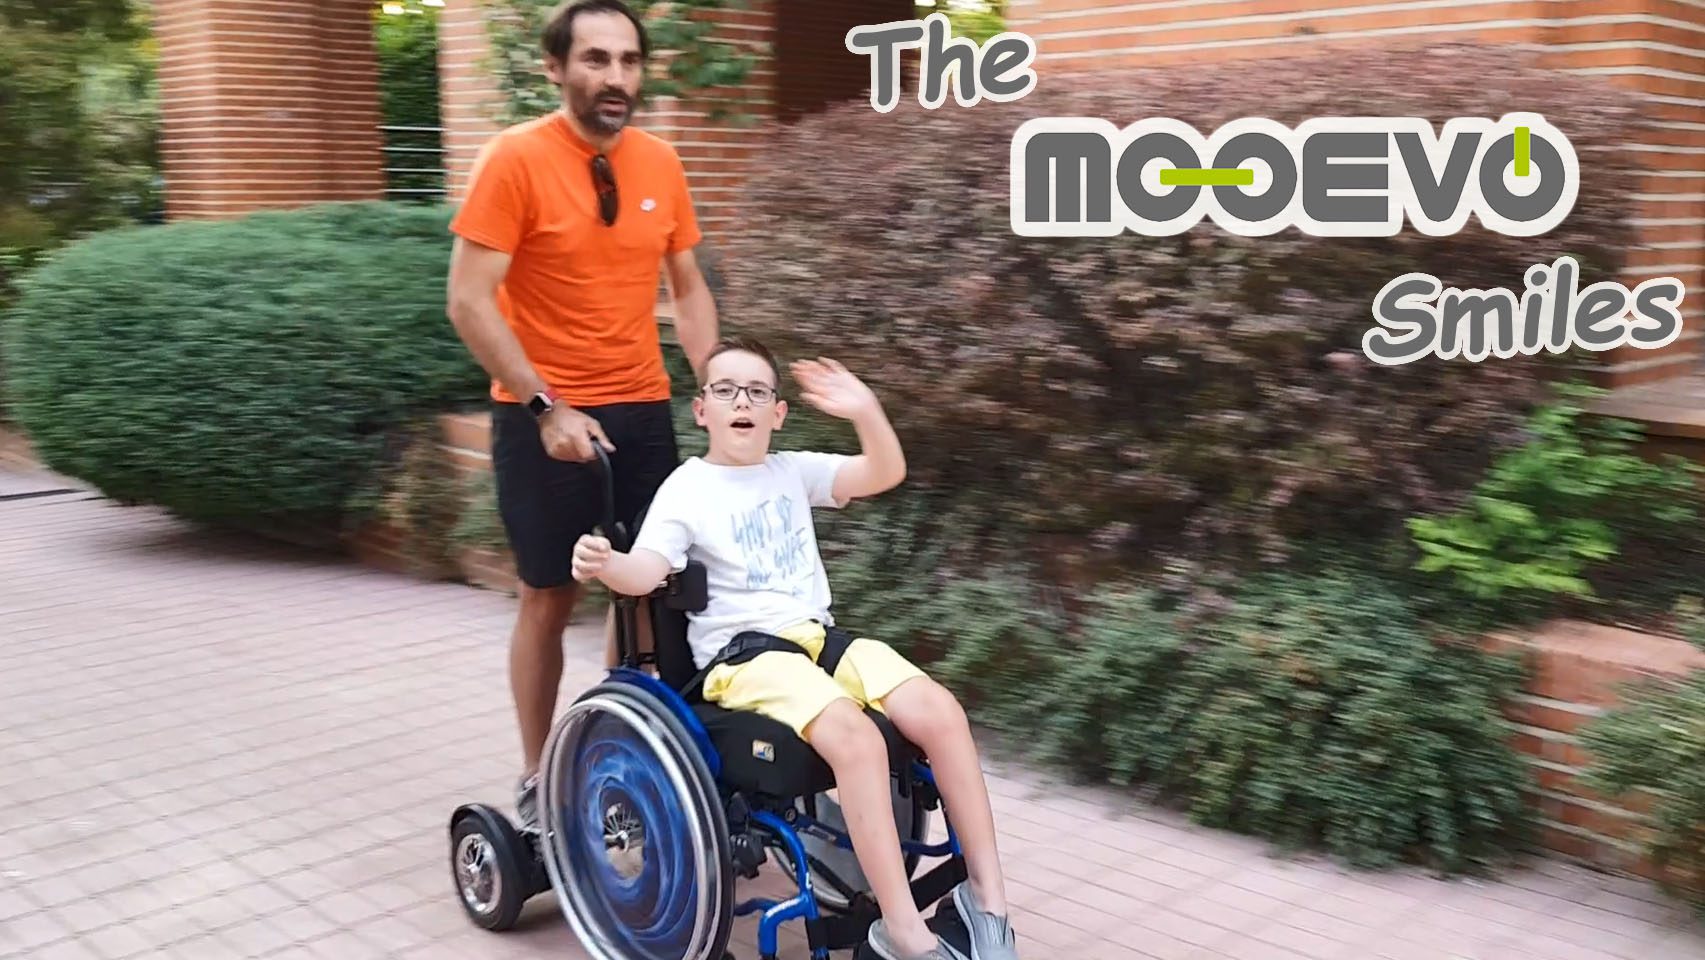 Mooevo Kit: Hoverboard Wheelchair Adapter